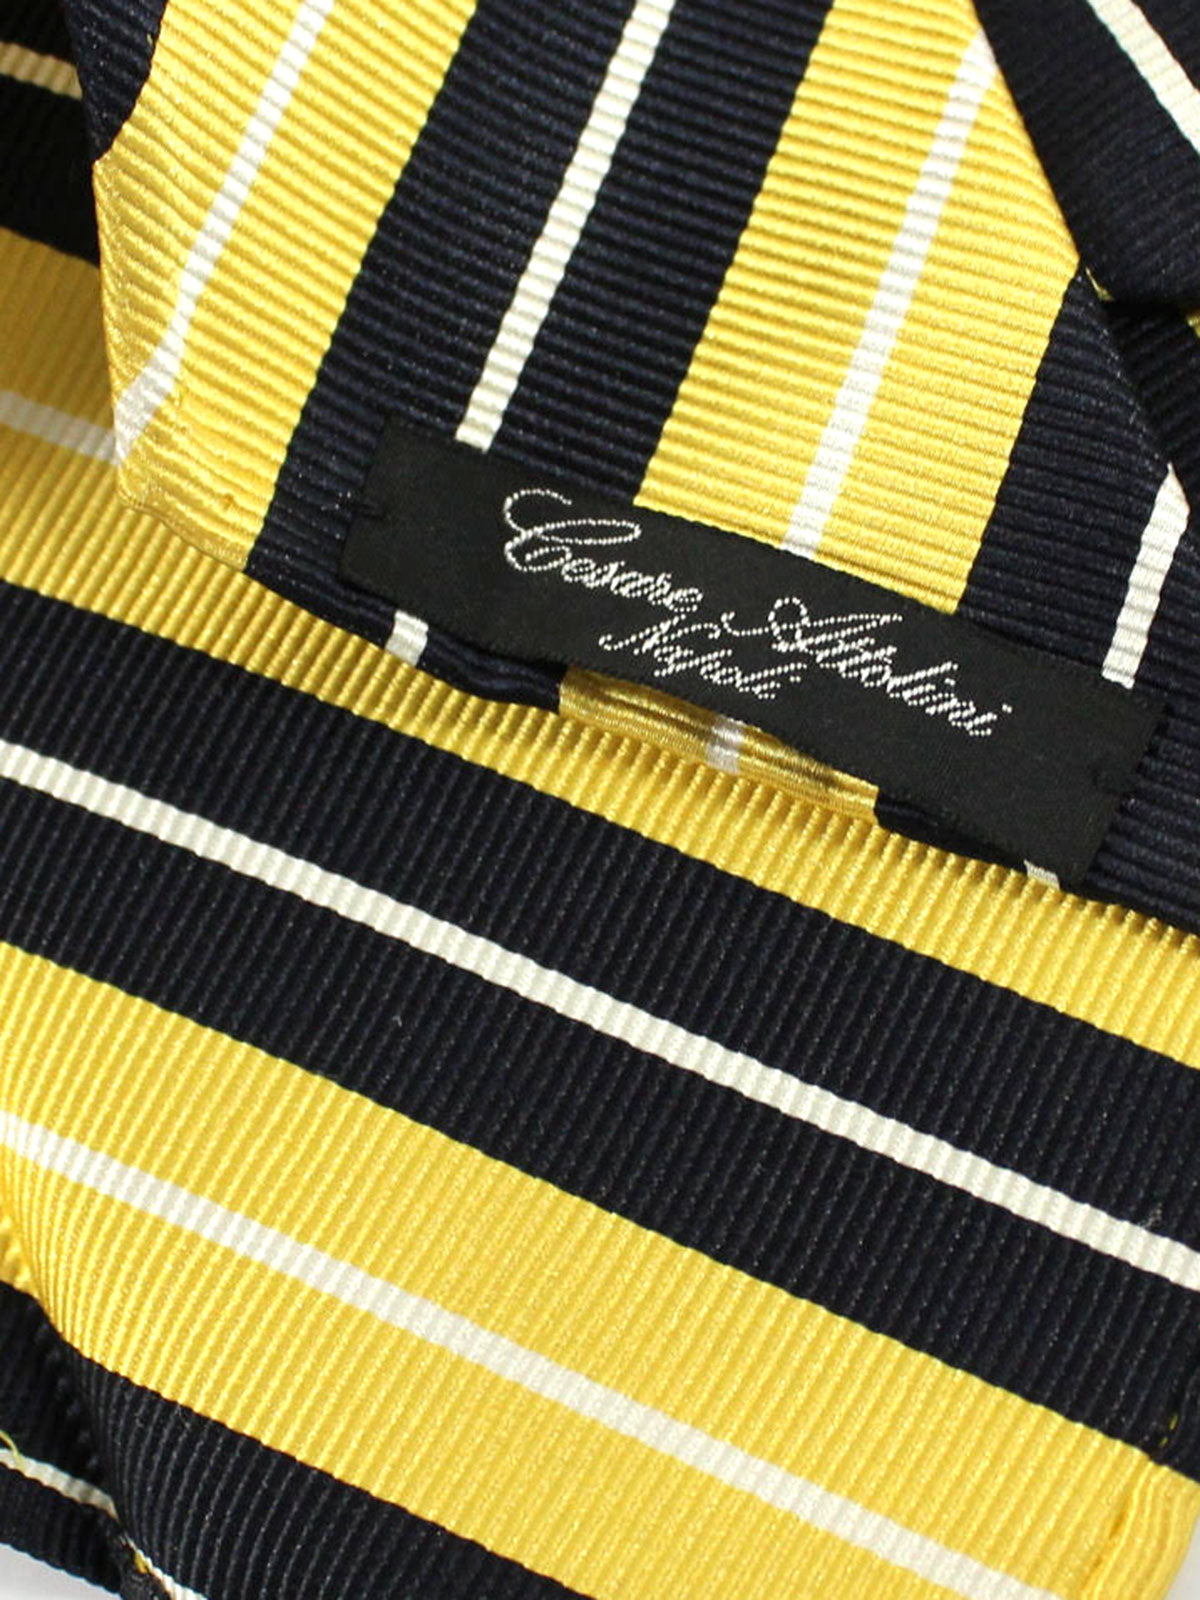 Attolini Silk Tie Yellow Black Stripes